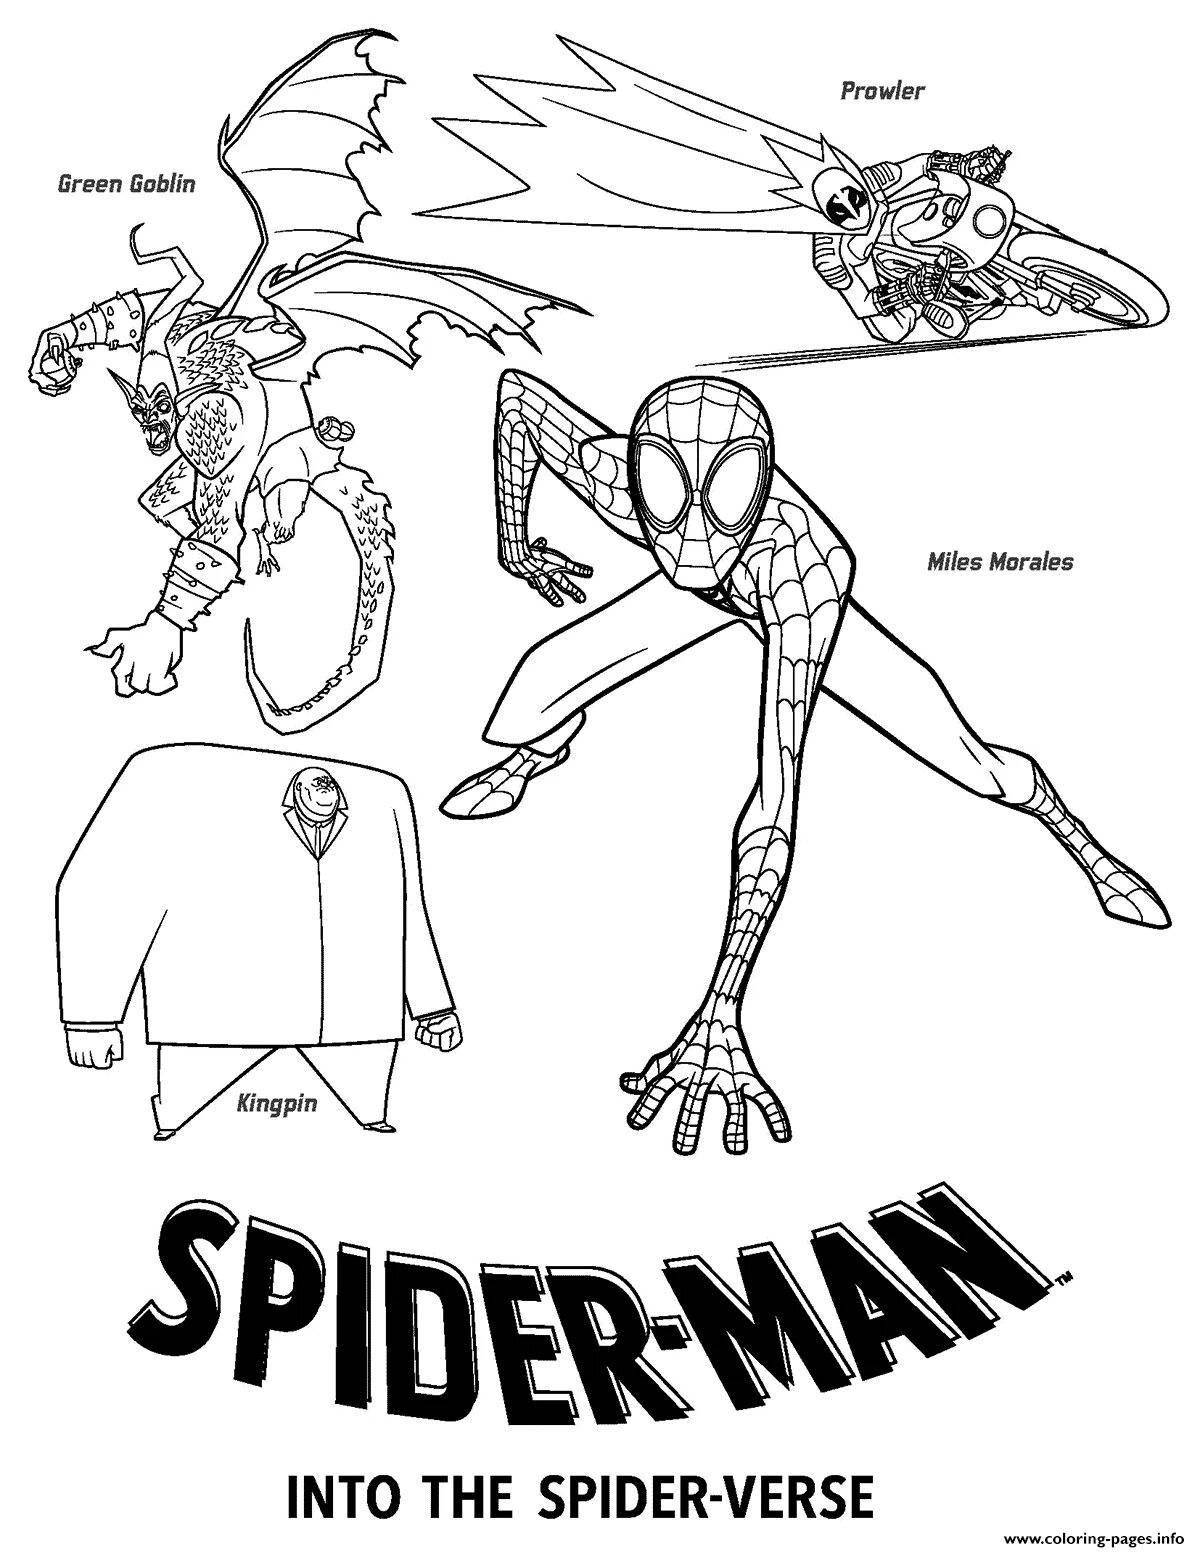 Spiderman through universes fun coloring book